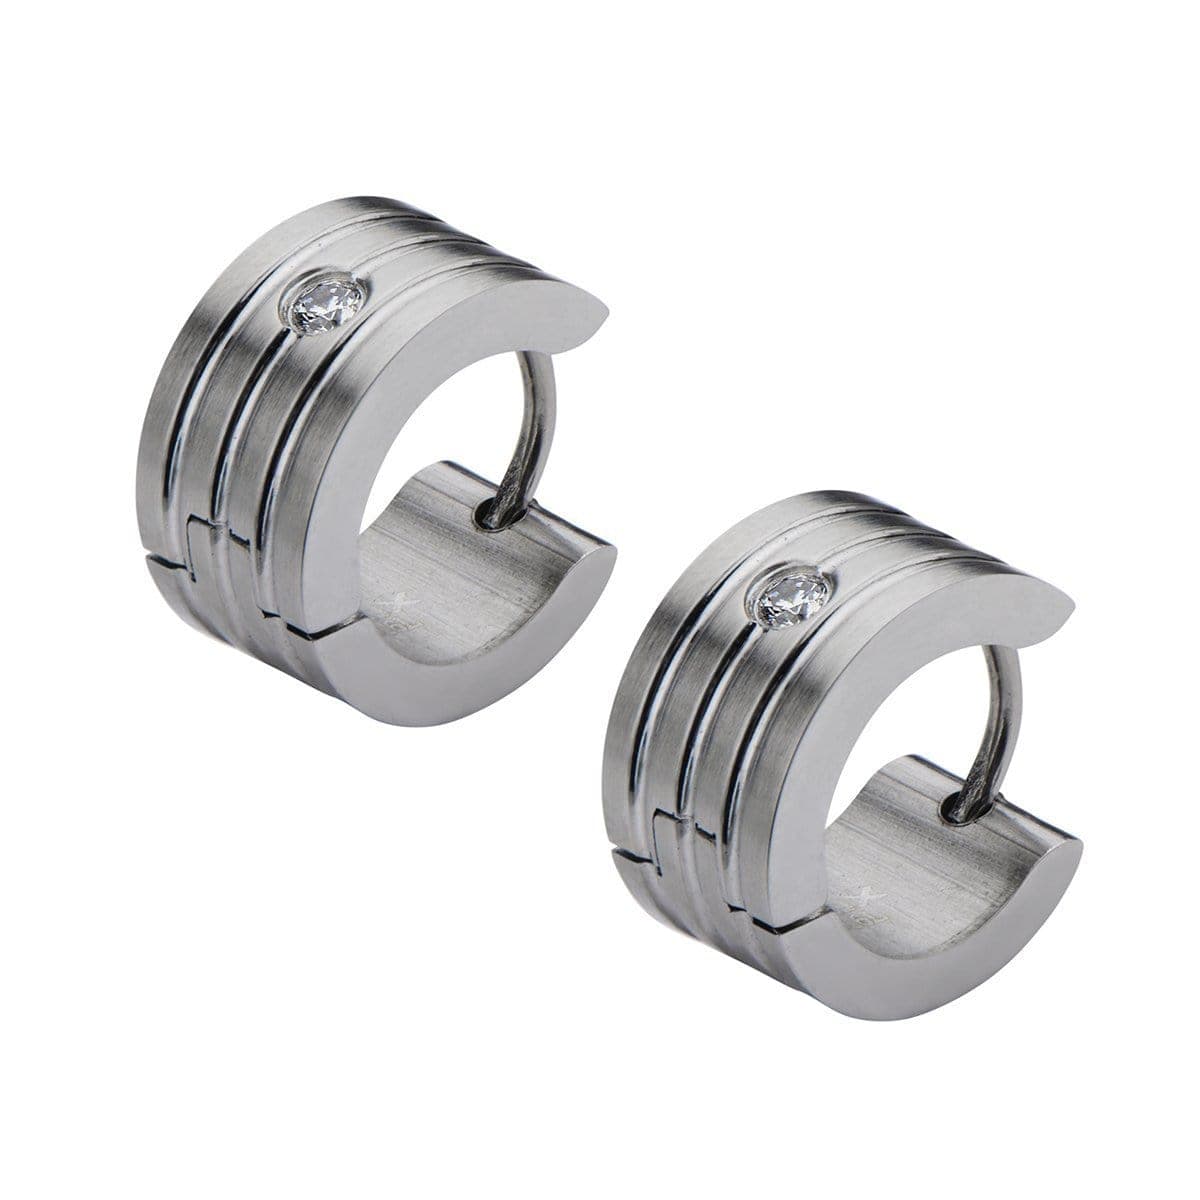 INOX JEWELRY Earrings Silver Tone Stainless Steel 7mm Grooved-Line White Crystal Huggies SSE277